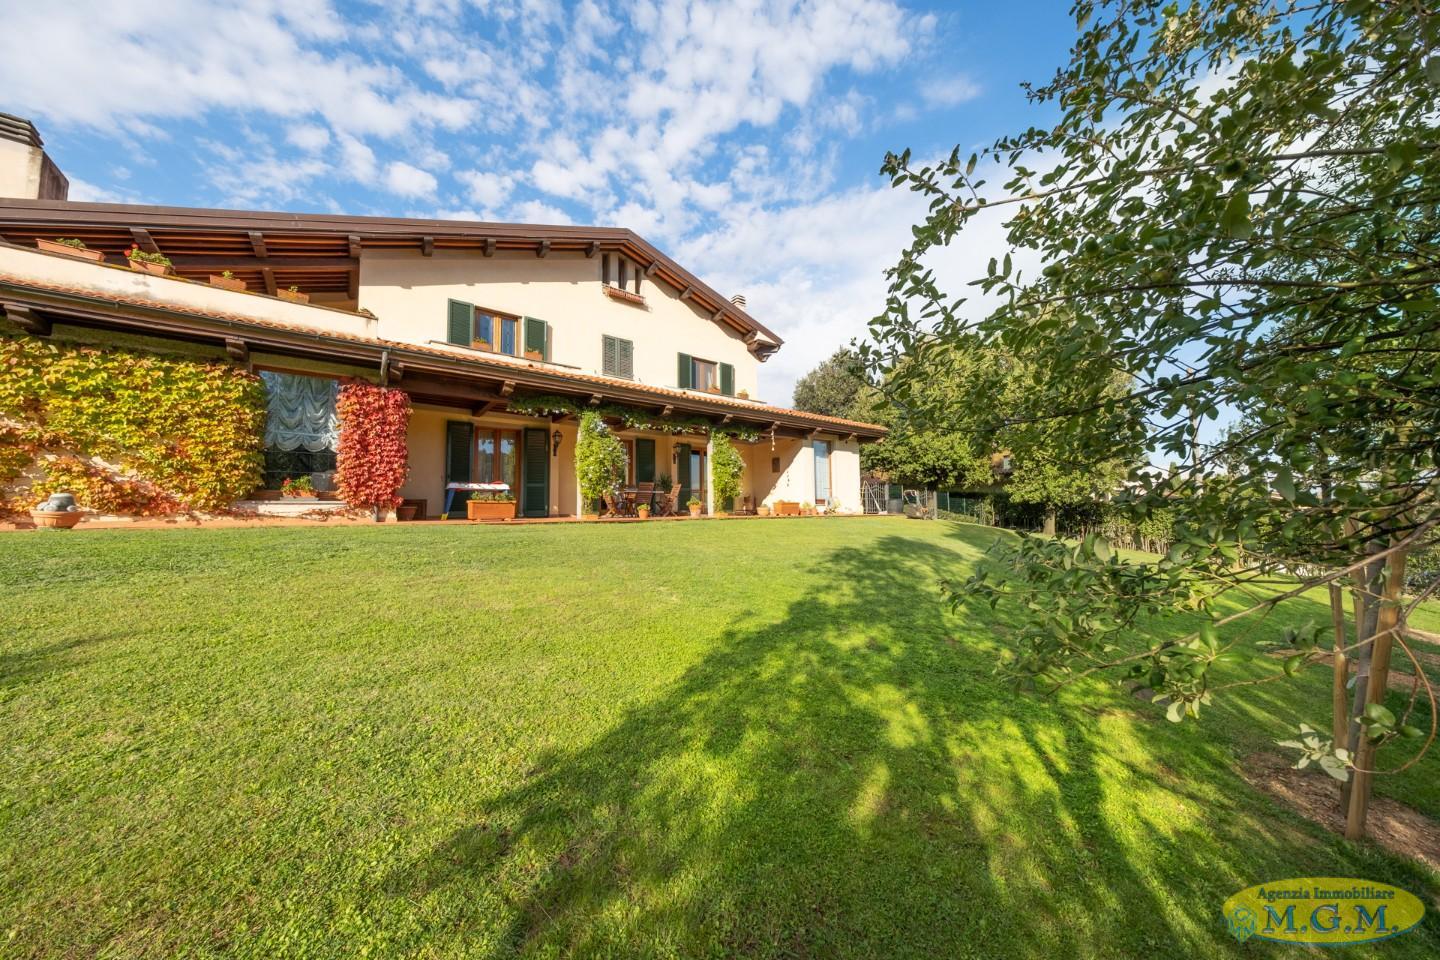 Mgmnet.it: Villa singola in vendita a Buti